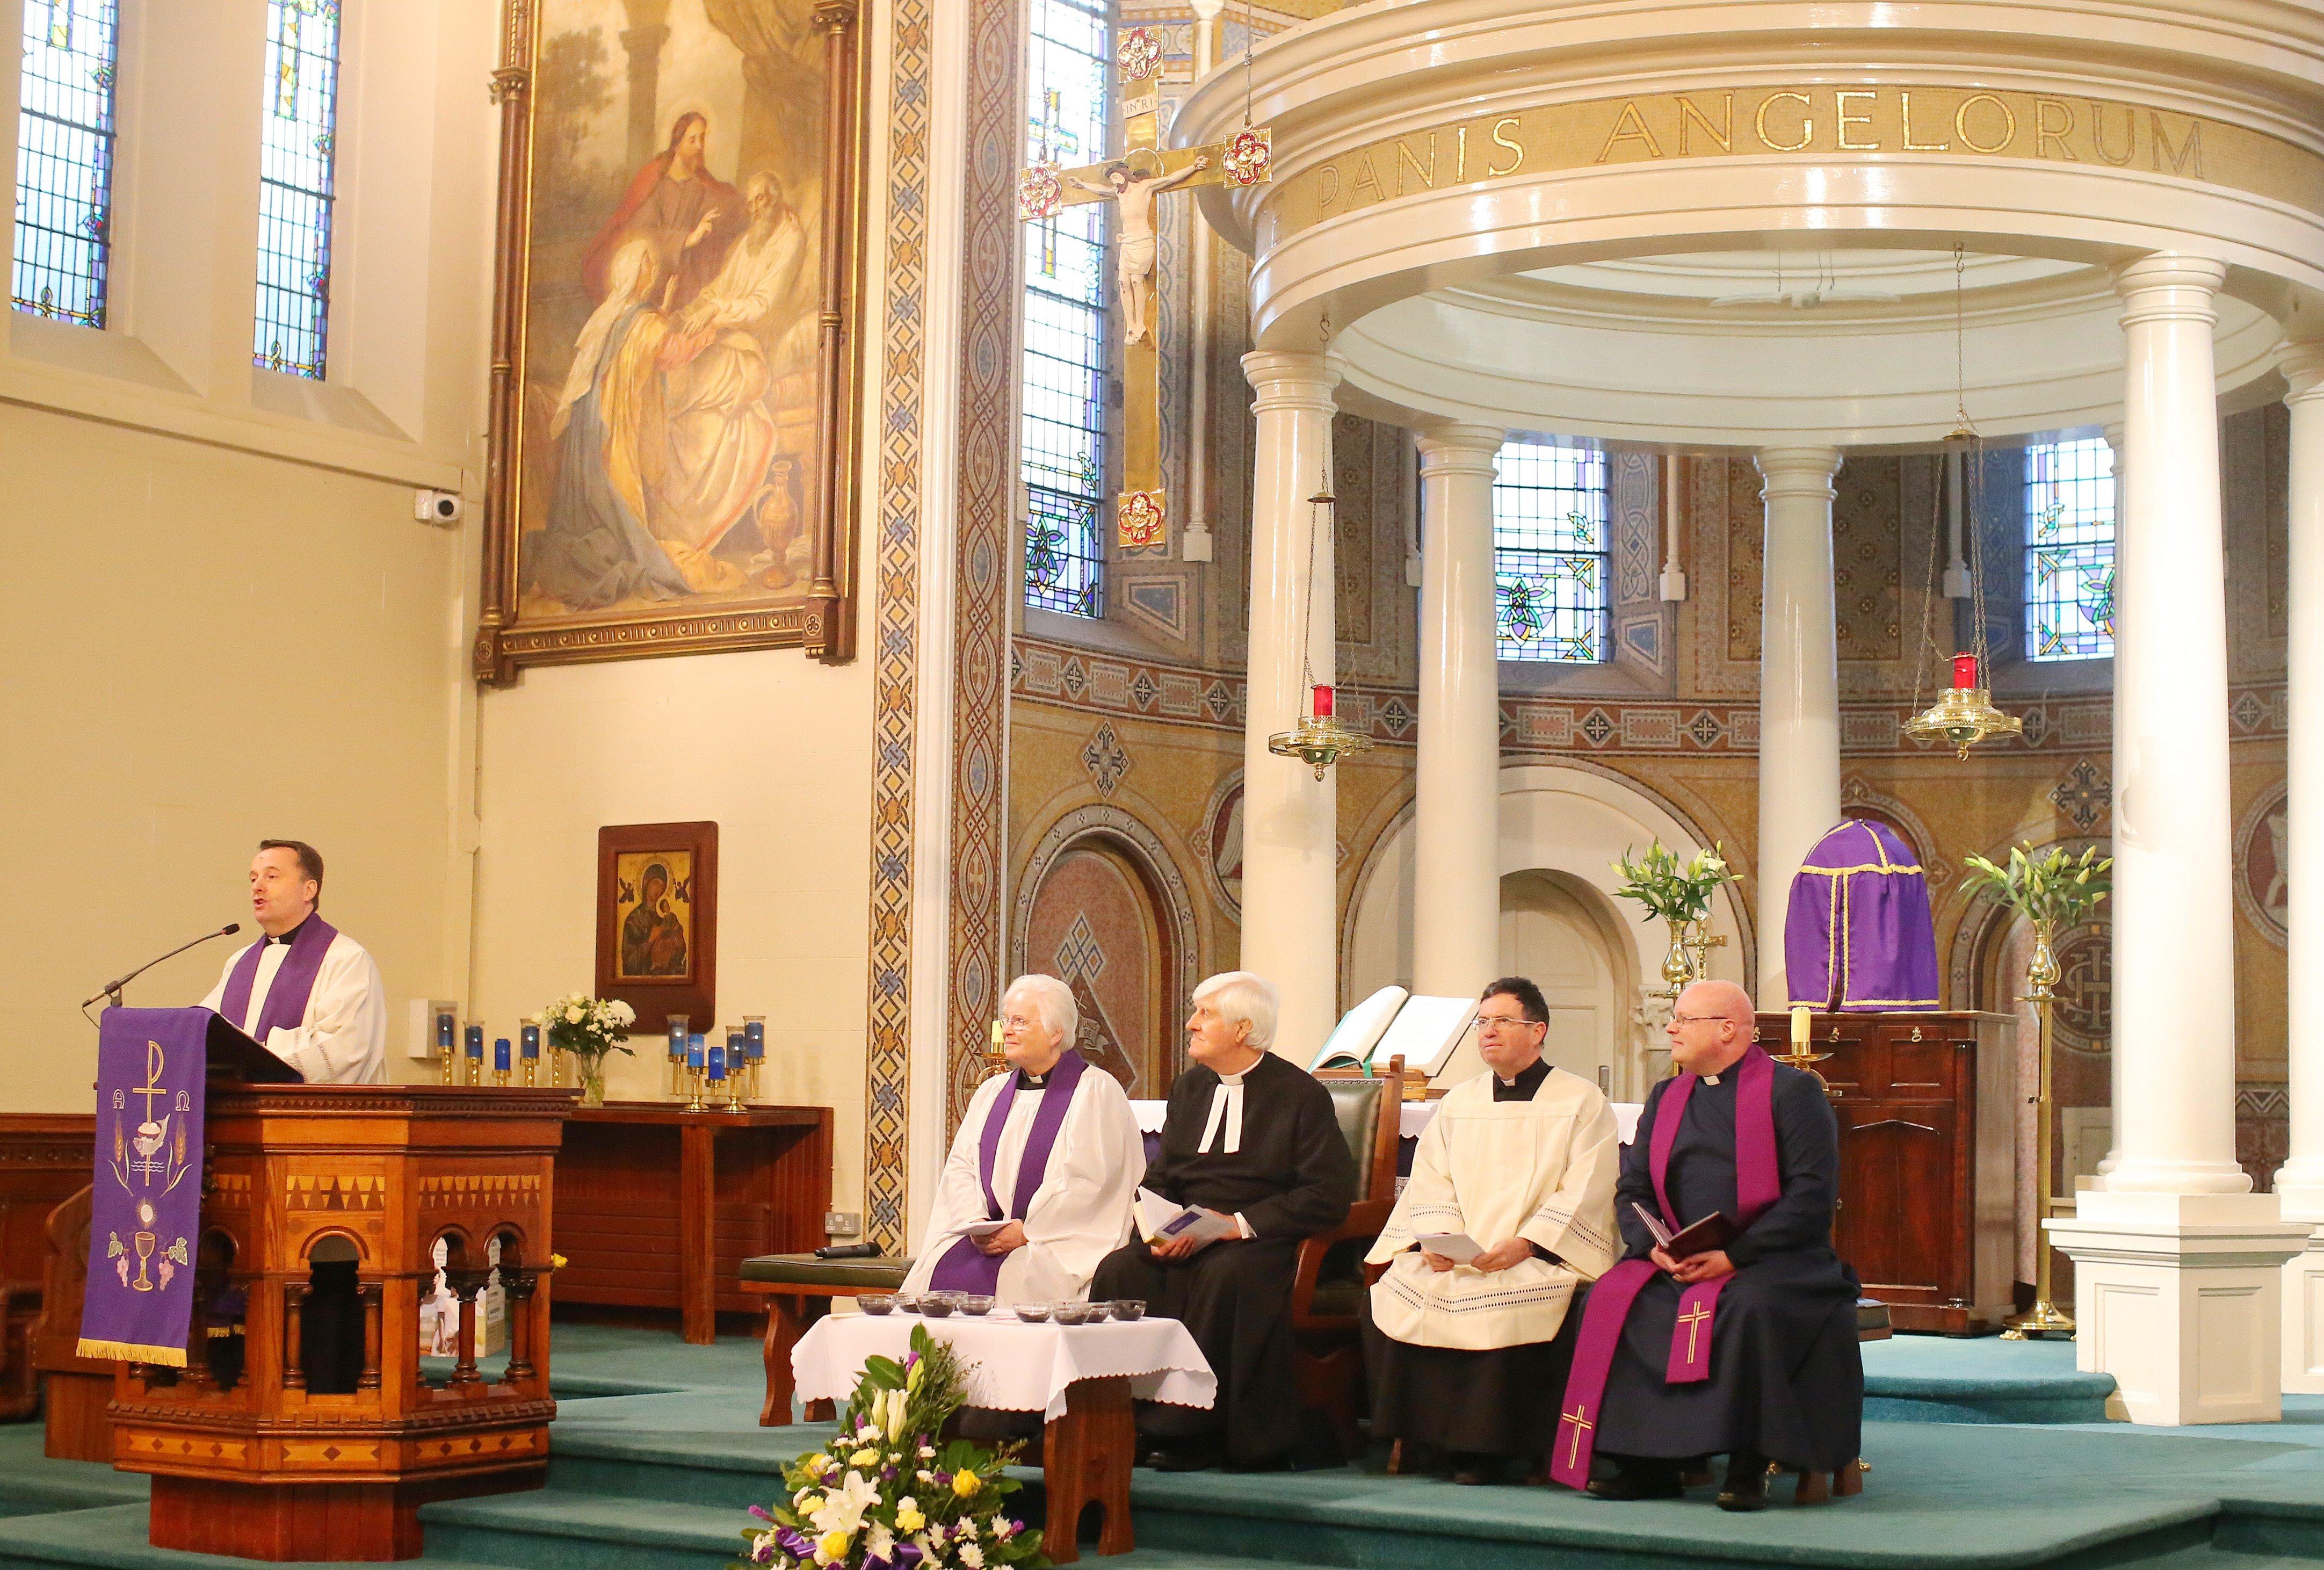 Fr Tim Bartlett, Rev Elizabeth Hanna, Rev Dr Ken Newell, Fr Martin Magill and Rev Robin Waugh pictured inside the church as the service begins